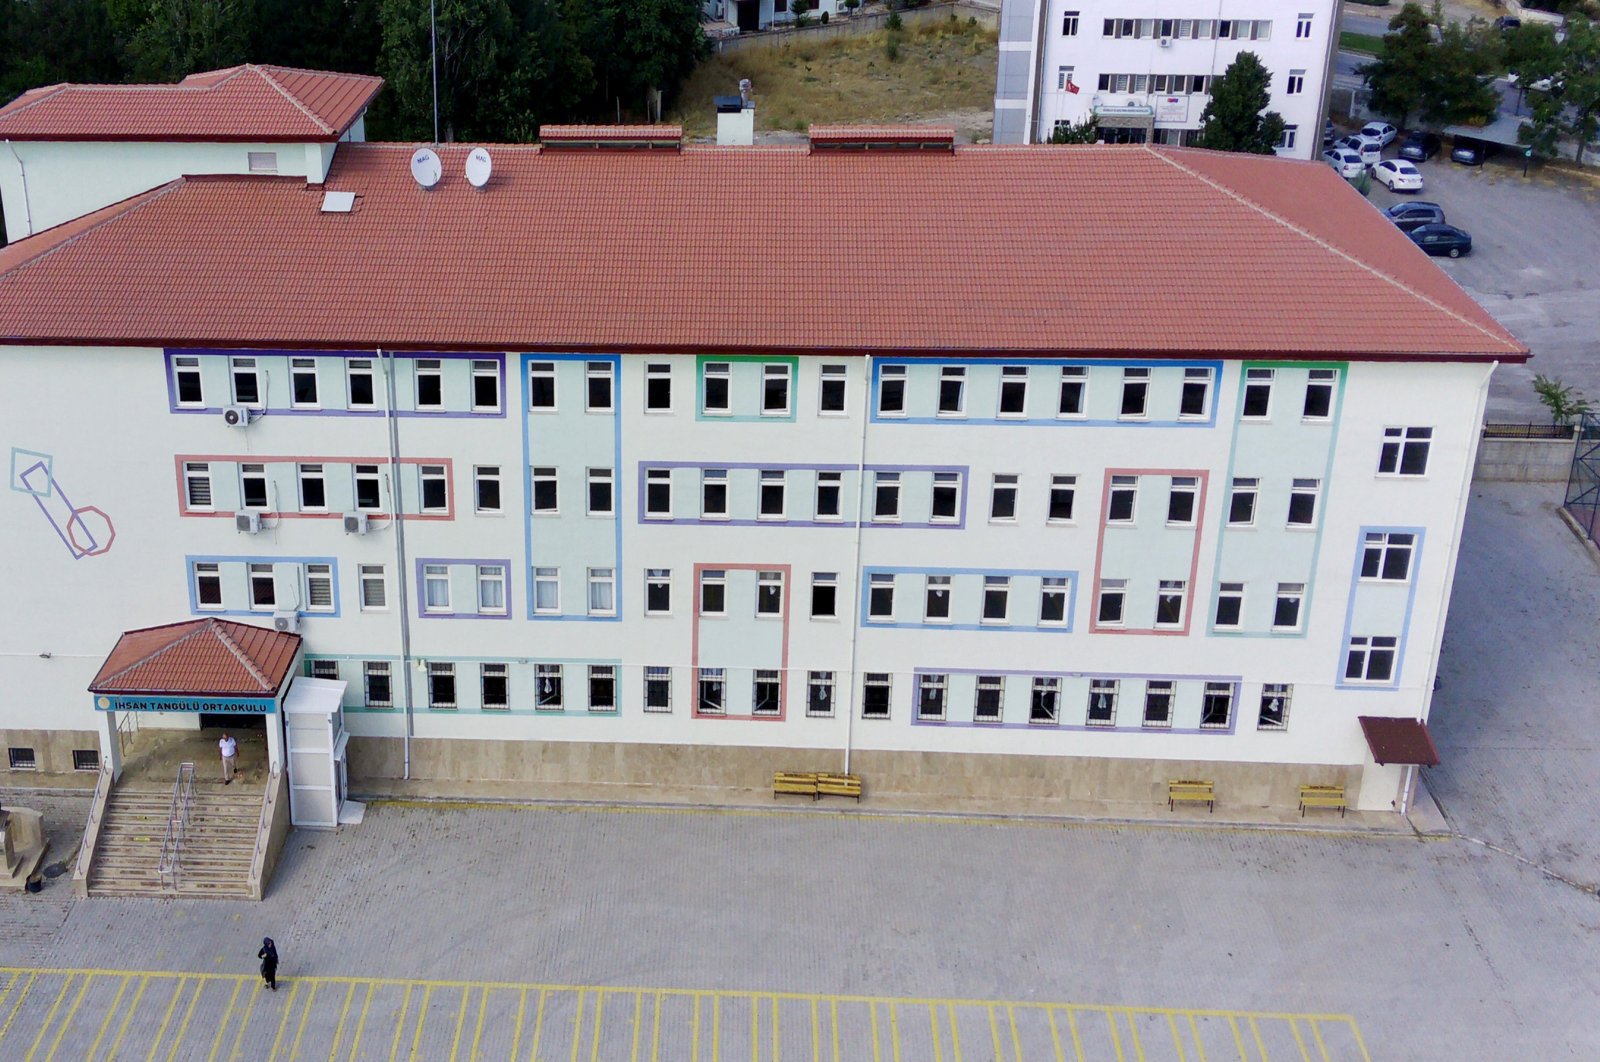 Türkiye welcomes students back to school amid new regulations